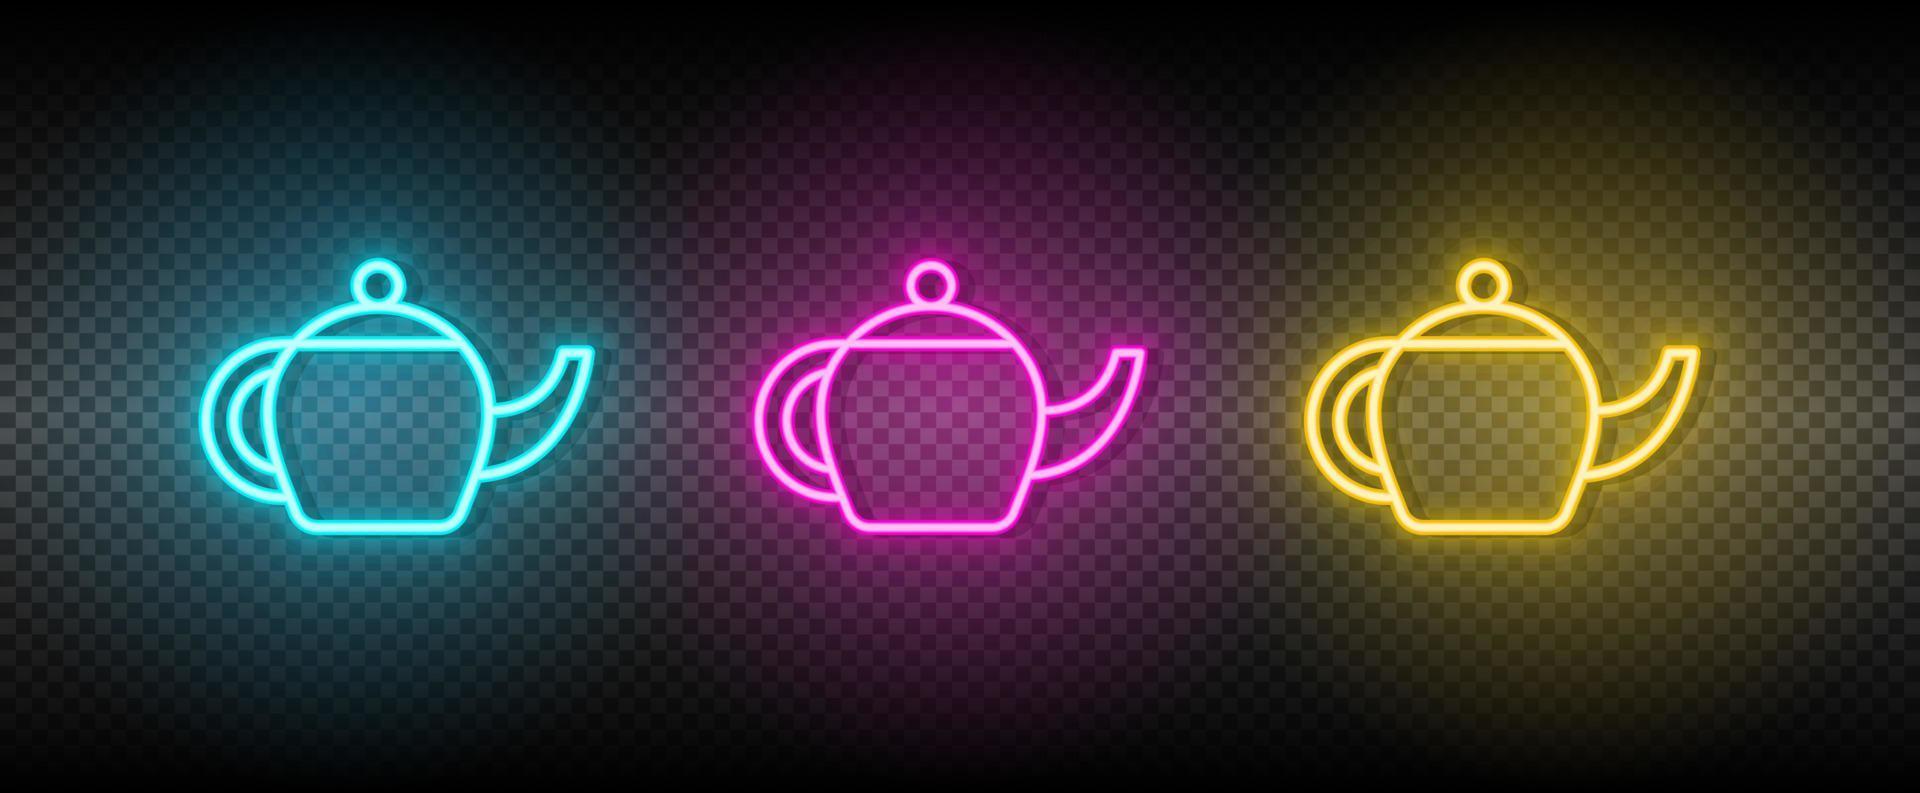 Tea bottle symbol neon vector icon.